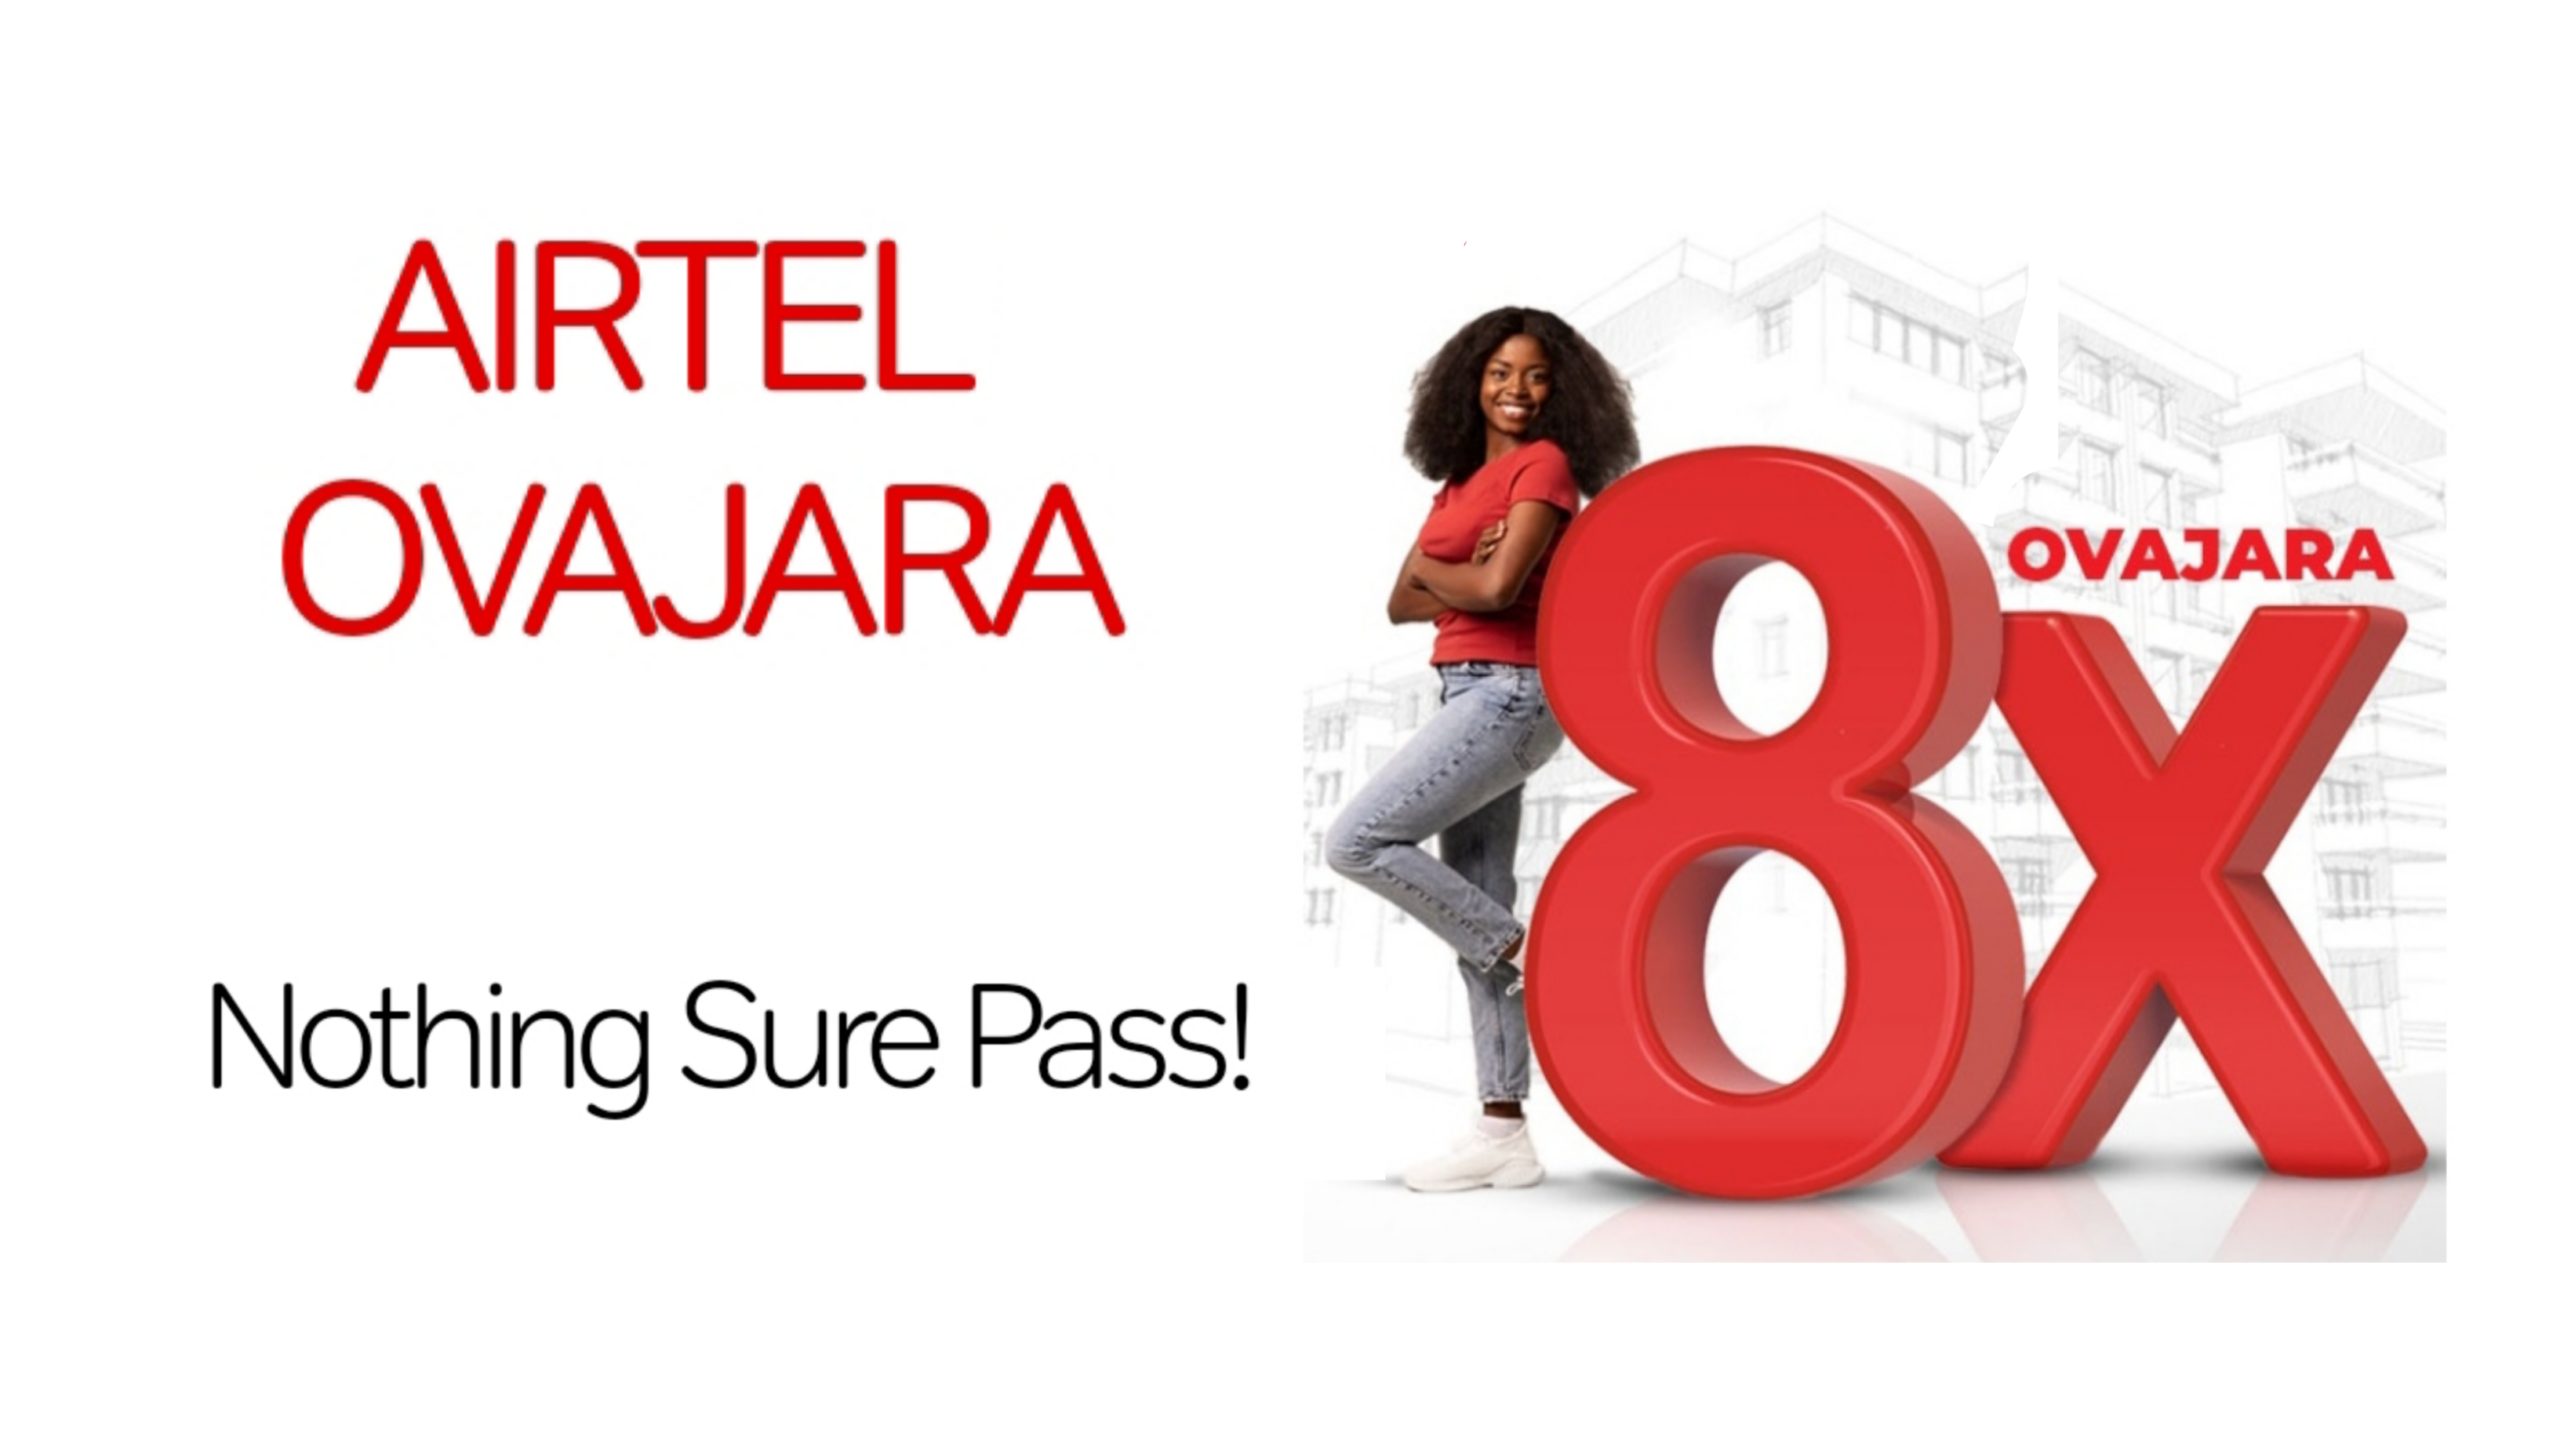 Airtel Overjara - Get Airtel 8X On Every Recharge